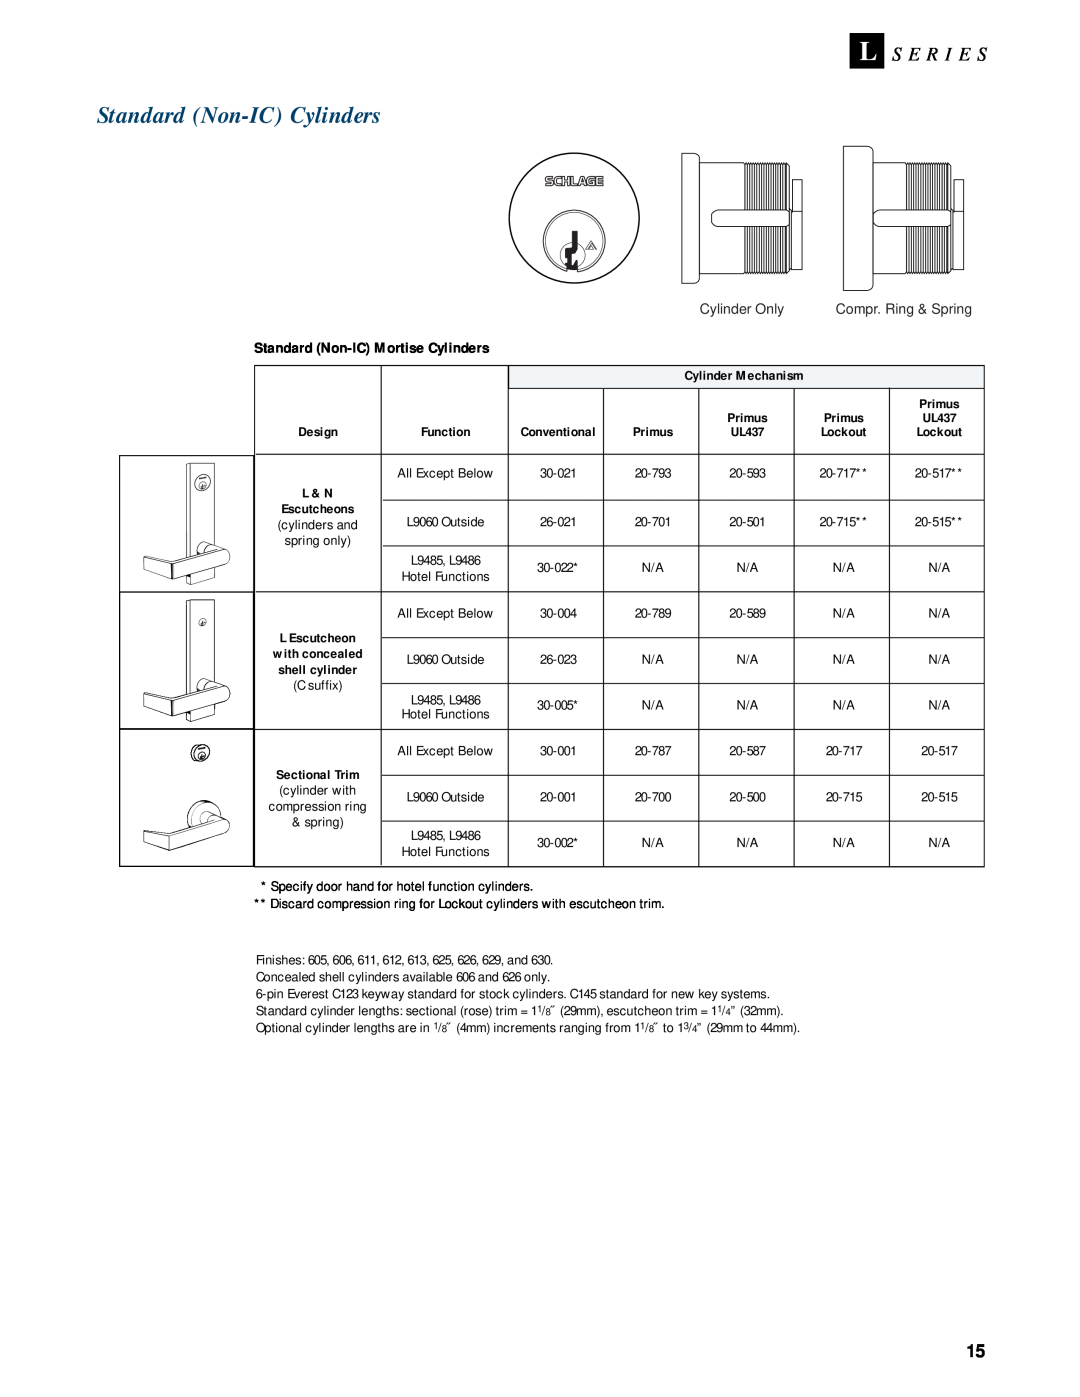 Schlage L-SERIES manual Standard Non-ICCylinders, L S E R I E S, Standard Non-ICMortise Cylinders 